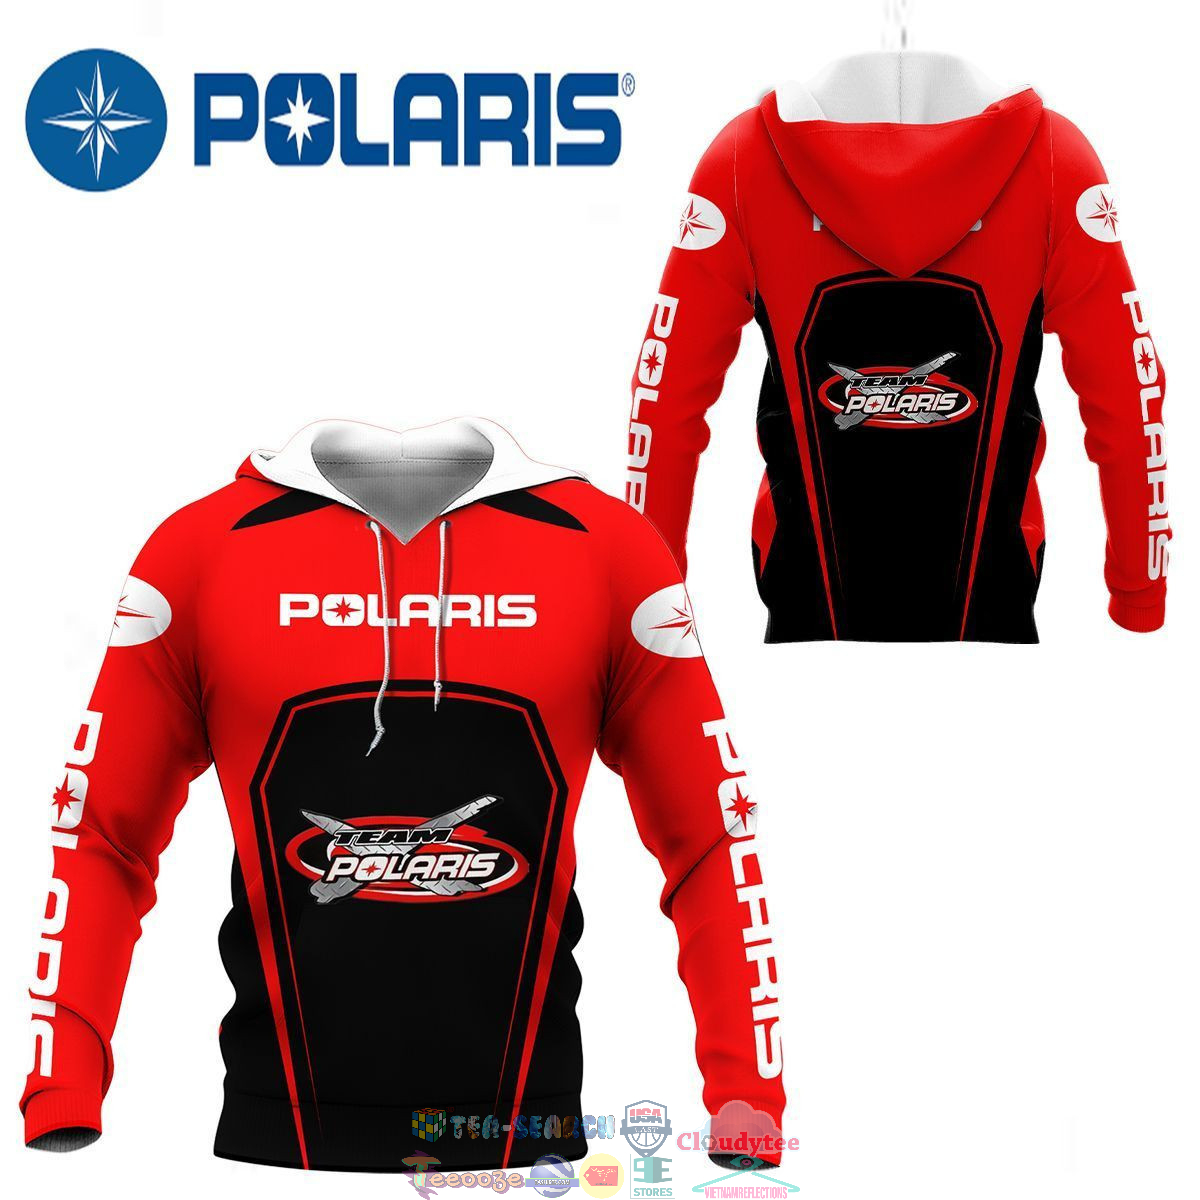 VjtzzR0k-TH160822-50xxxPolaris-Racing-Team-ver-11-3D-hoodie-and-t-shirt3.jpg